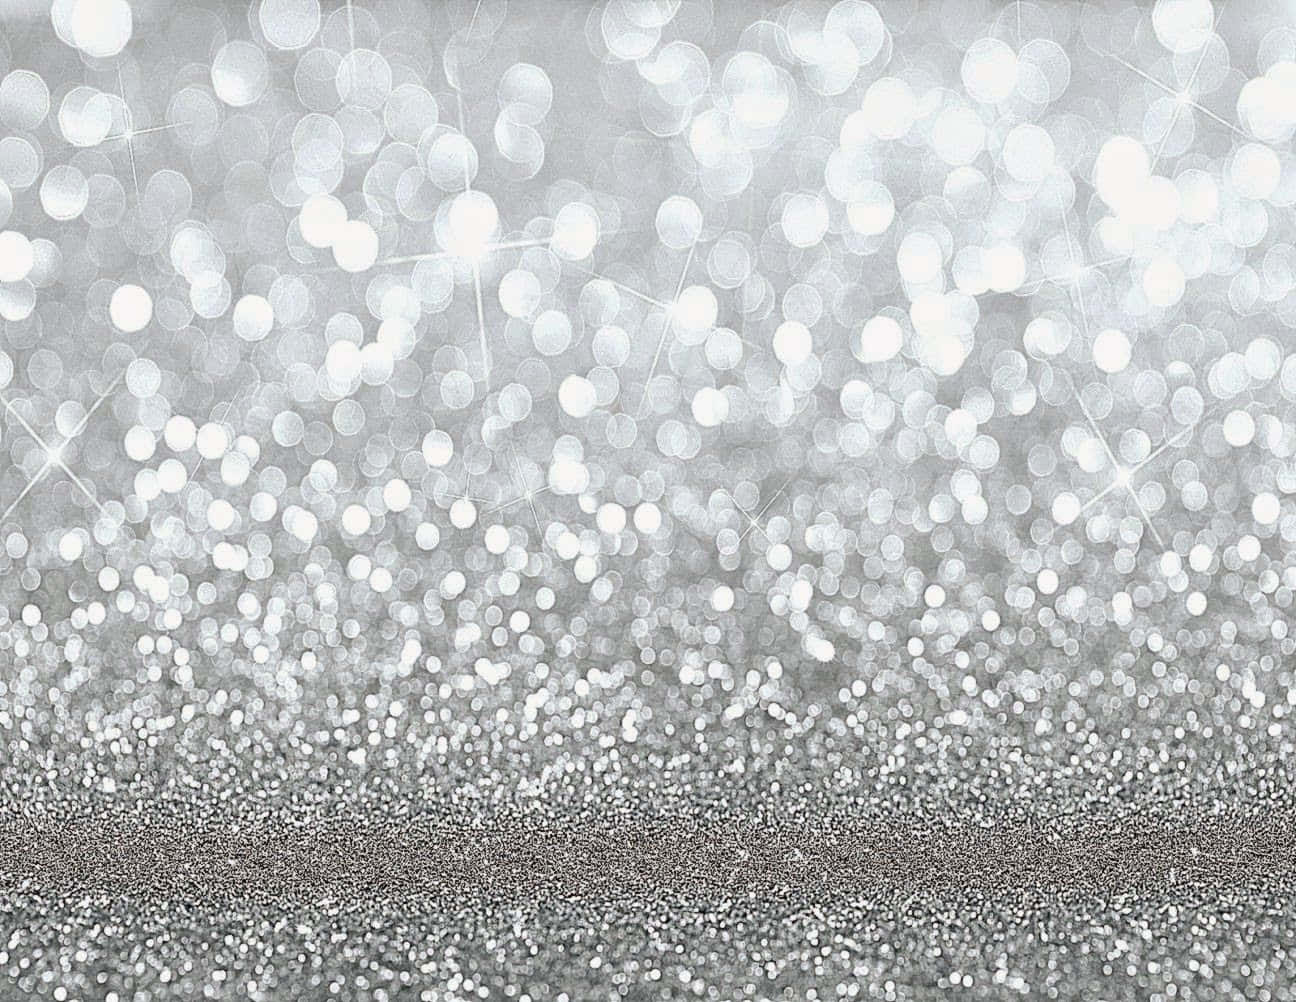 Silverglitter-bakgrund Med En Vit Linje.